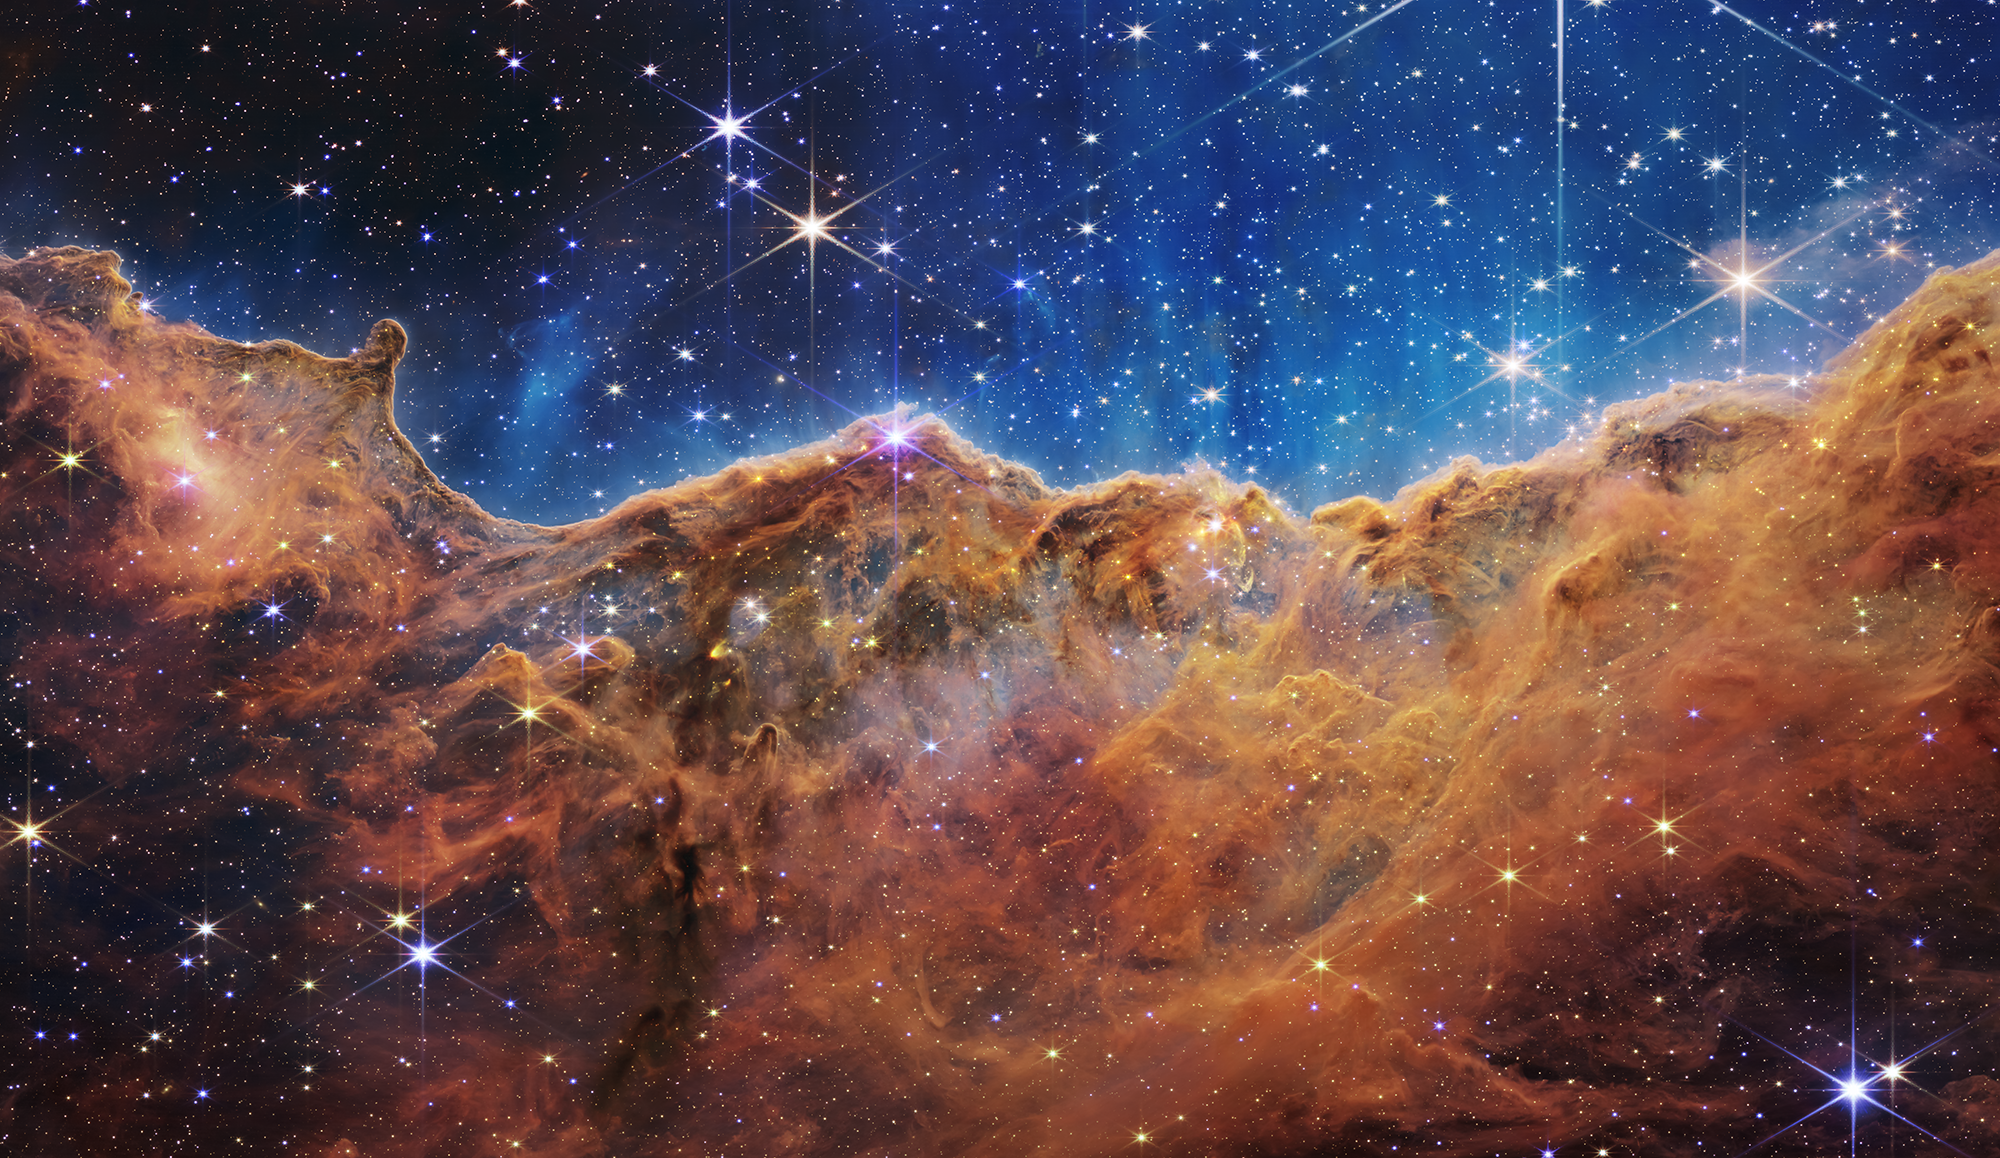 Star-forming region in the Carina Nebula